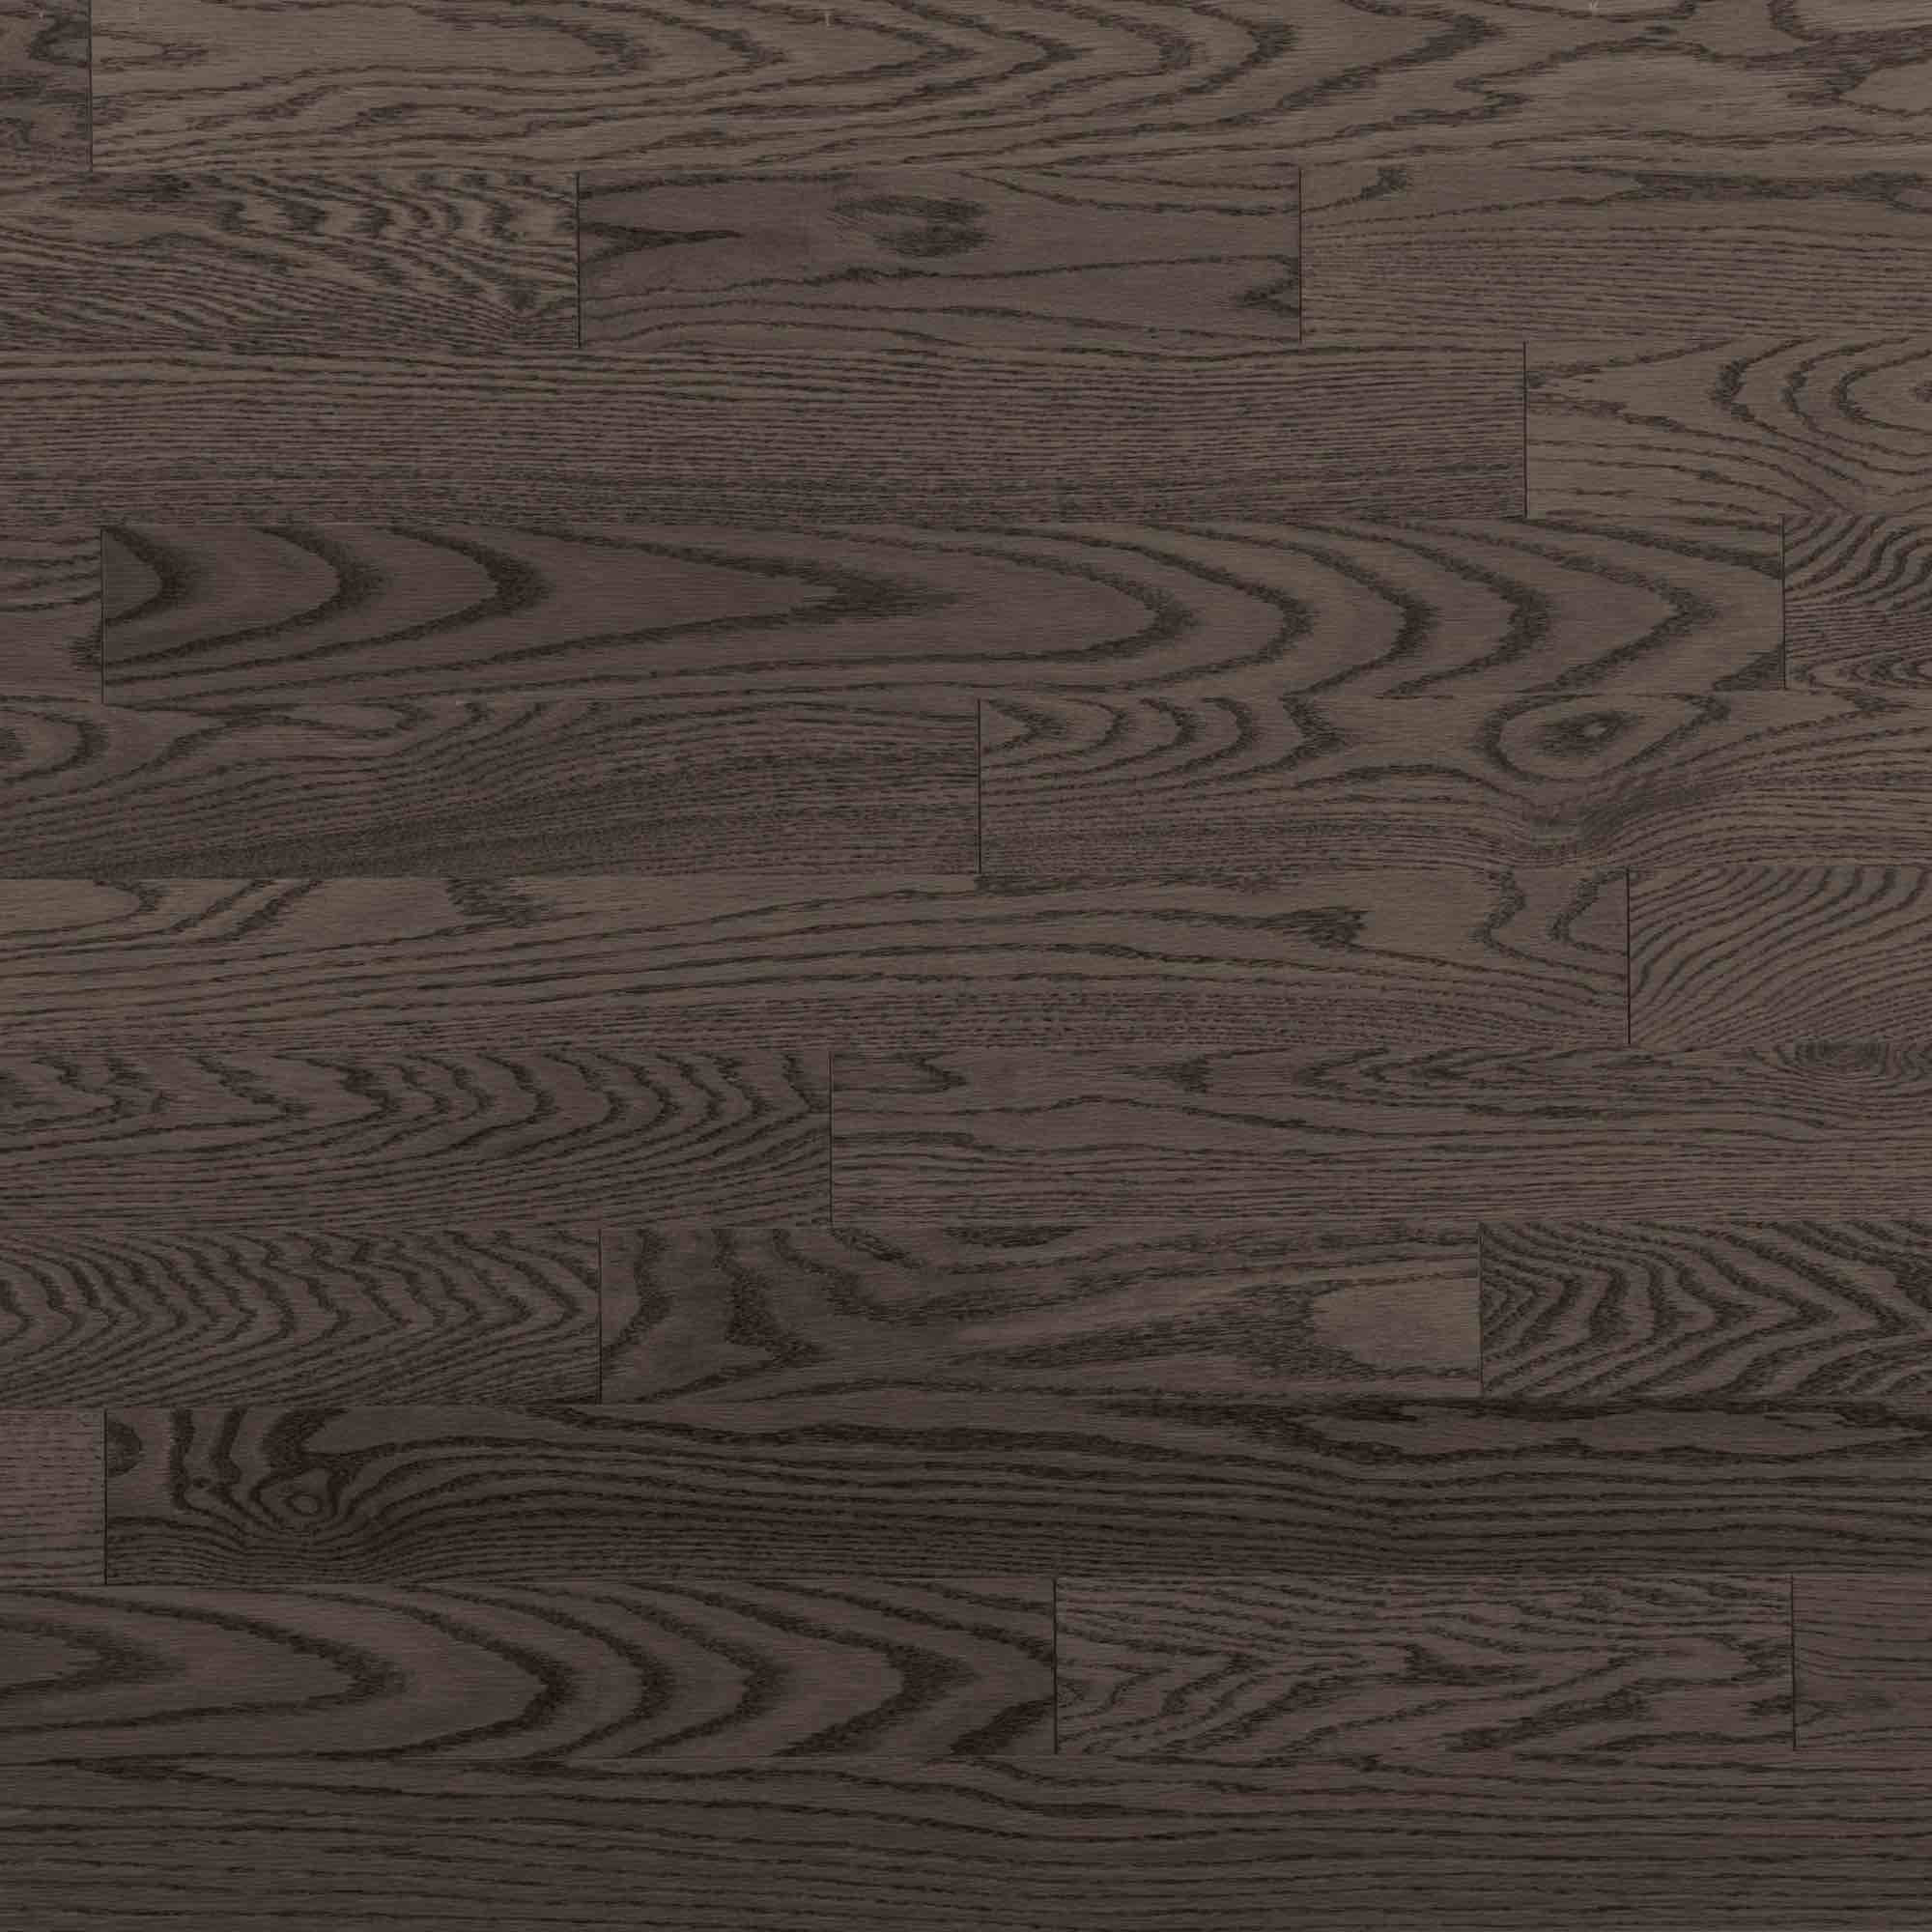 hardwood flooring dark brown of hardwood westfloors west vancouver hardwood flooring carpet for featured hardwoods red oak charcoal